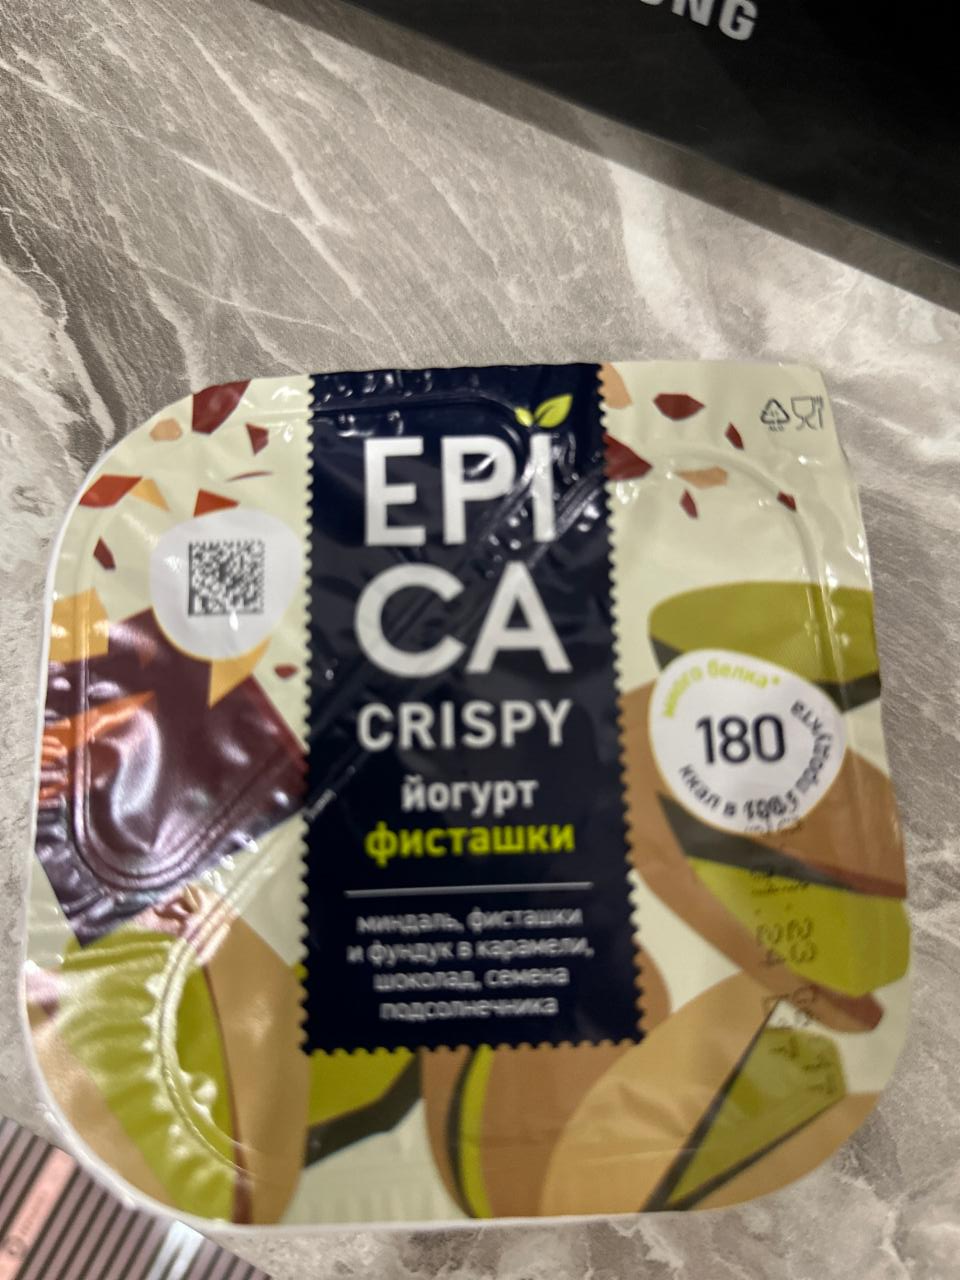 Фото - Йогурт с фисташками и смесь из семян подсолнечника, орехов и темного шоколада Epica crispy